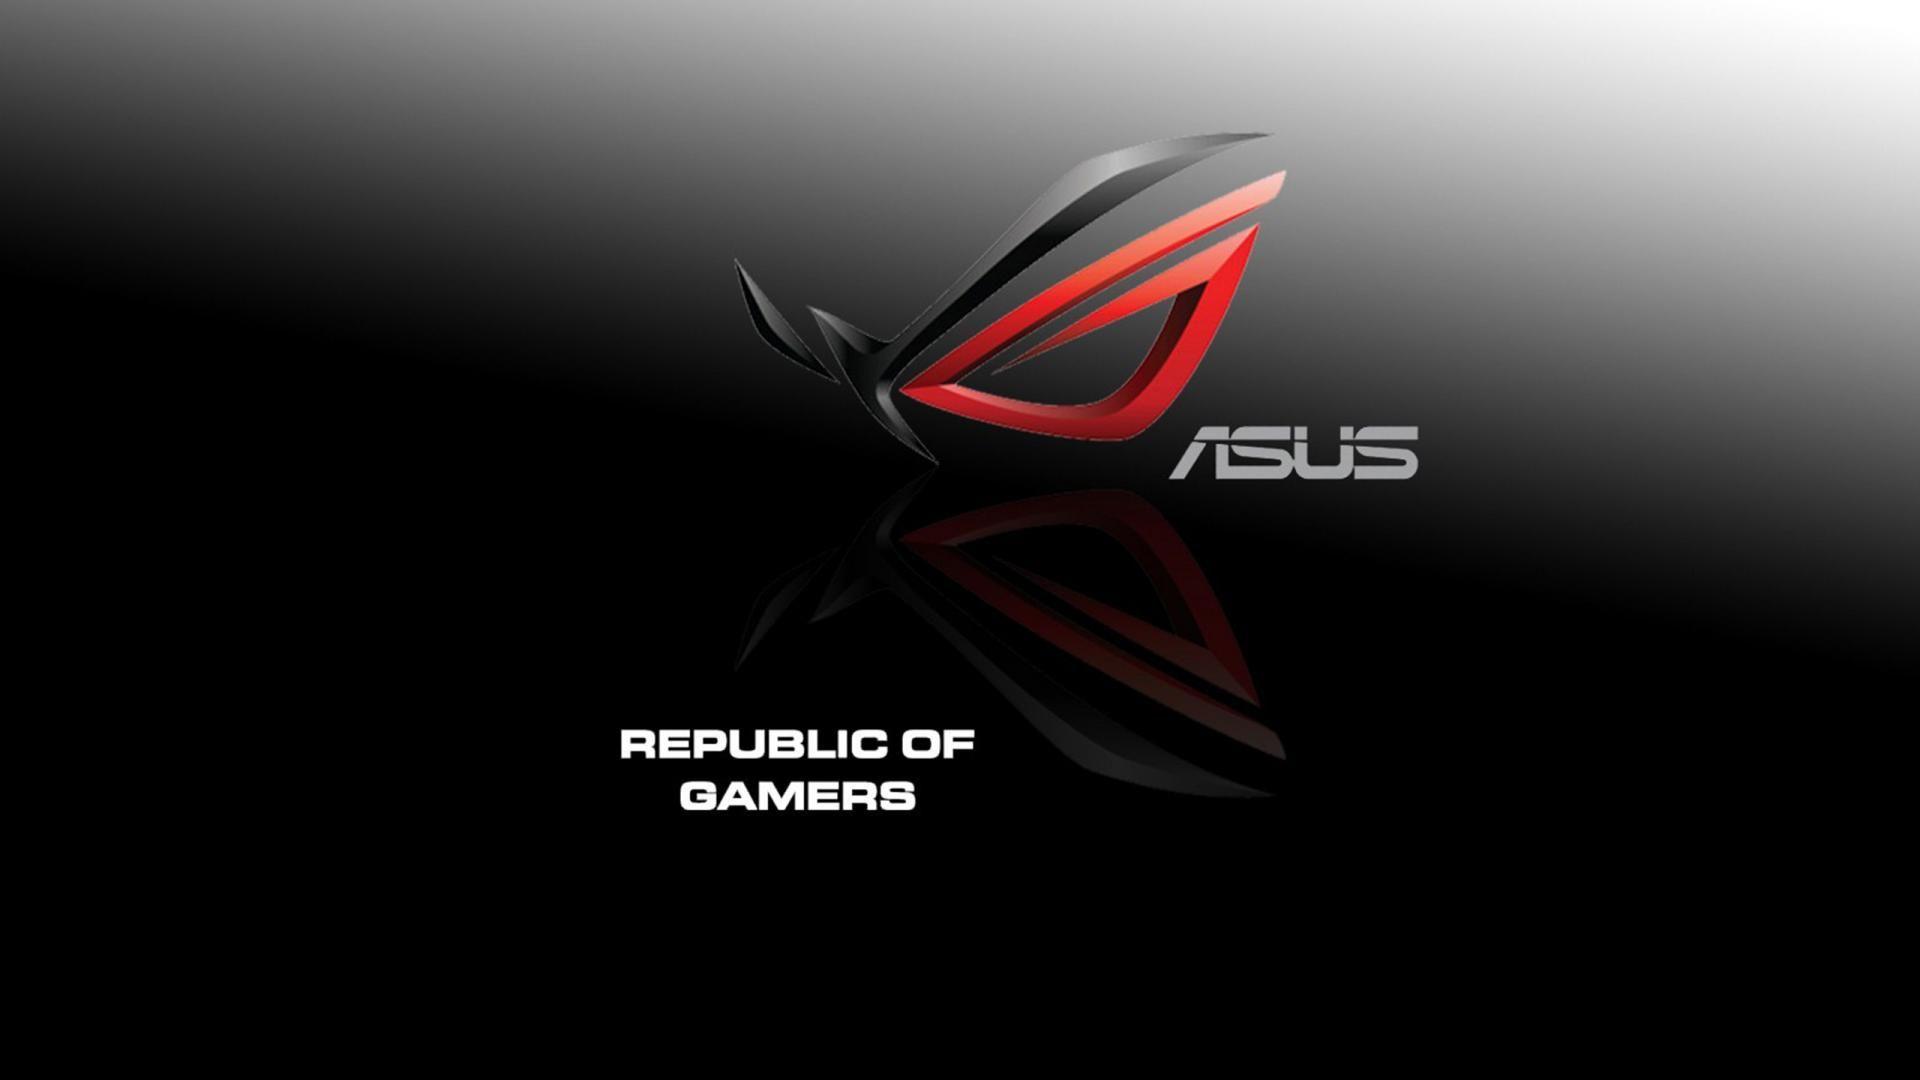 Asus ROG 4K Gaming Wallpapers - Top Free Asus ROG 4K Gaming Backgrounds